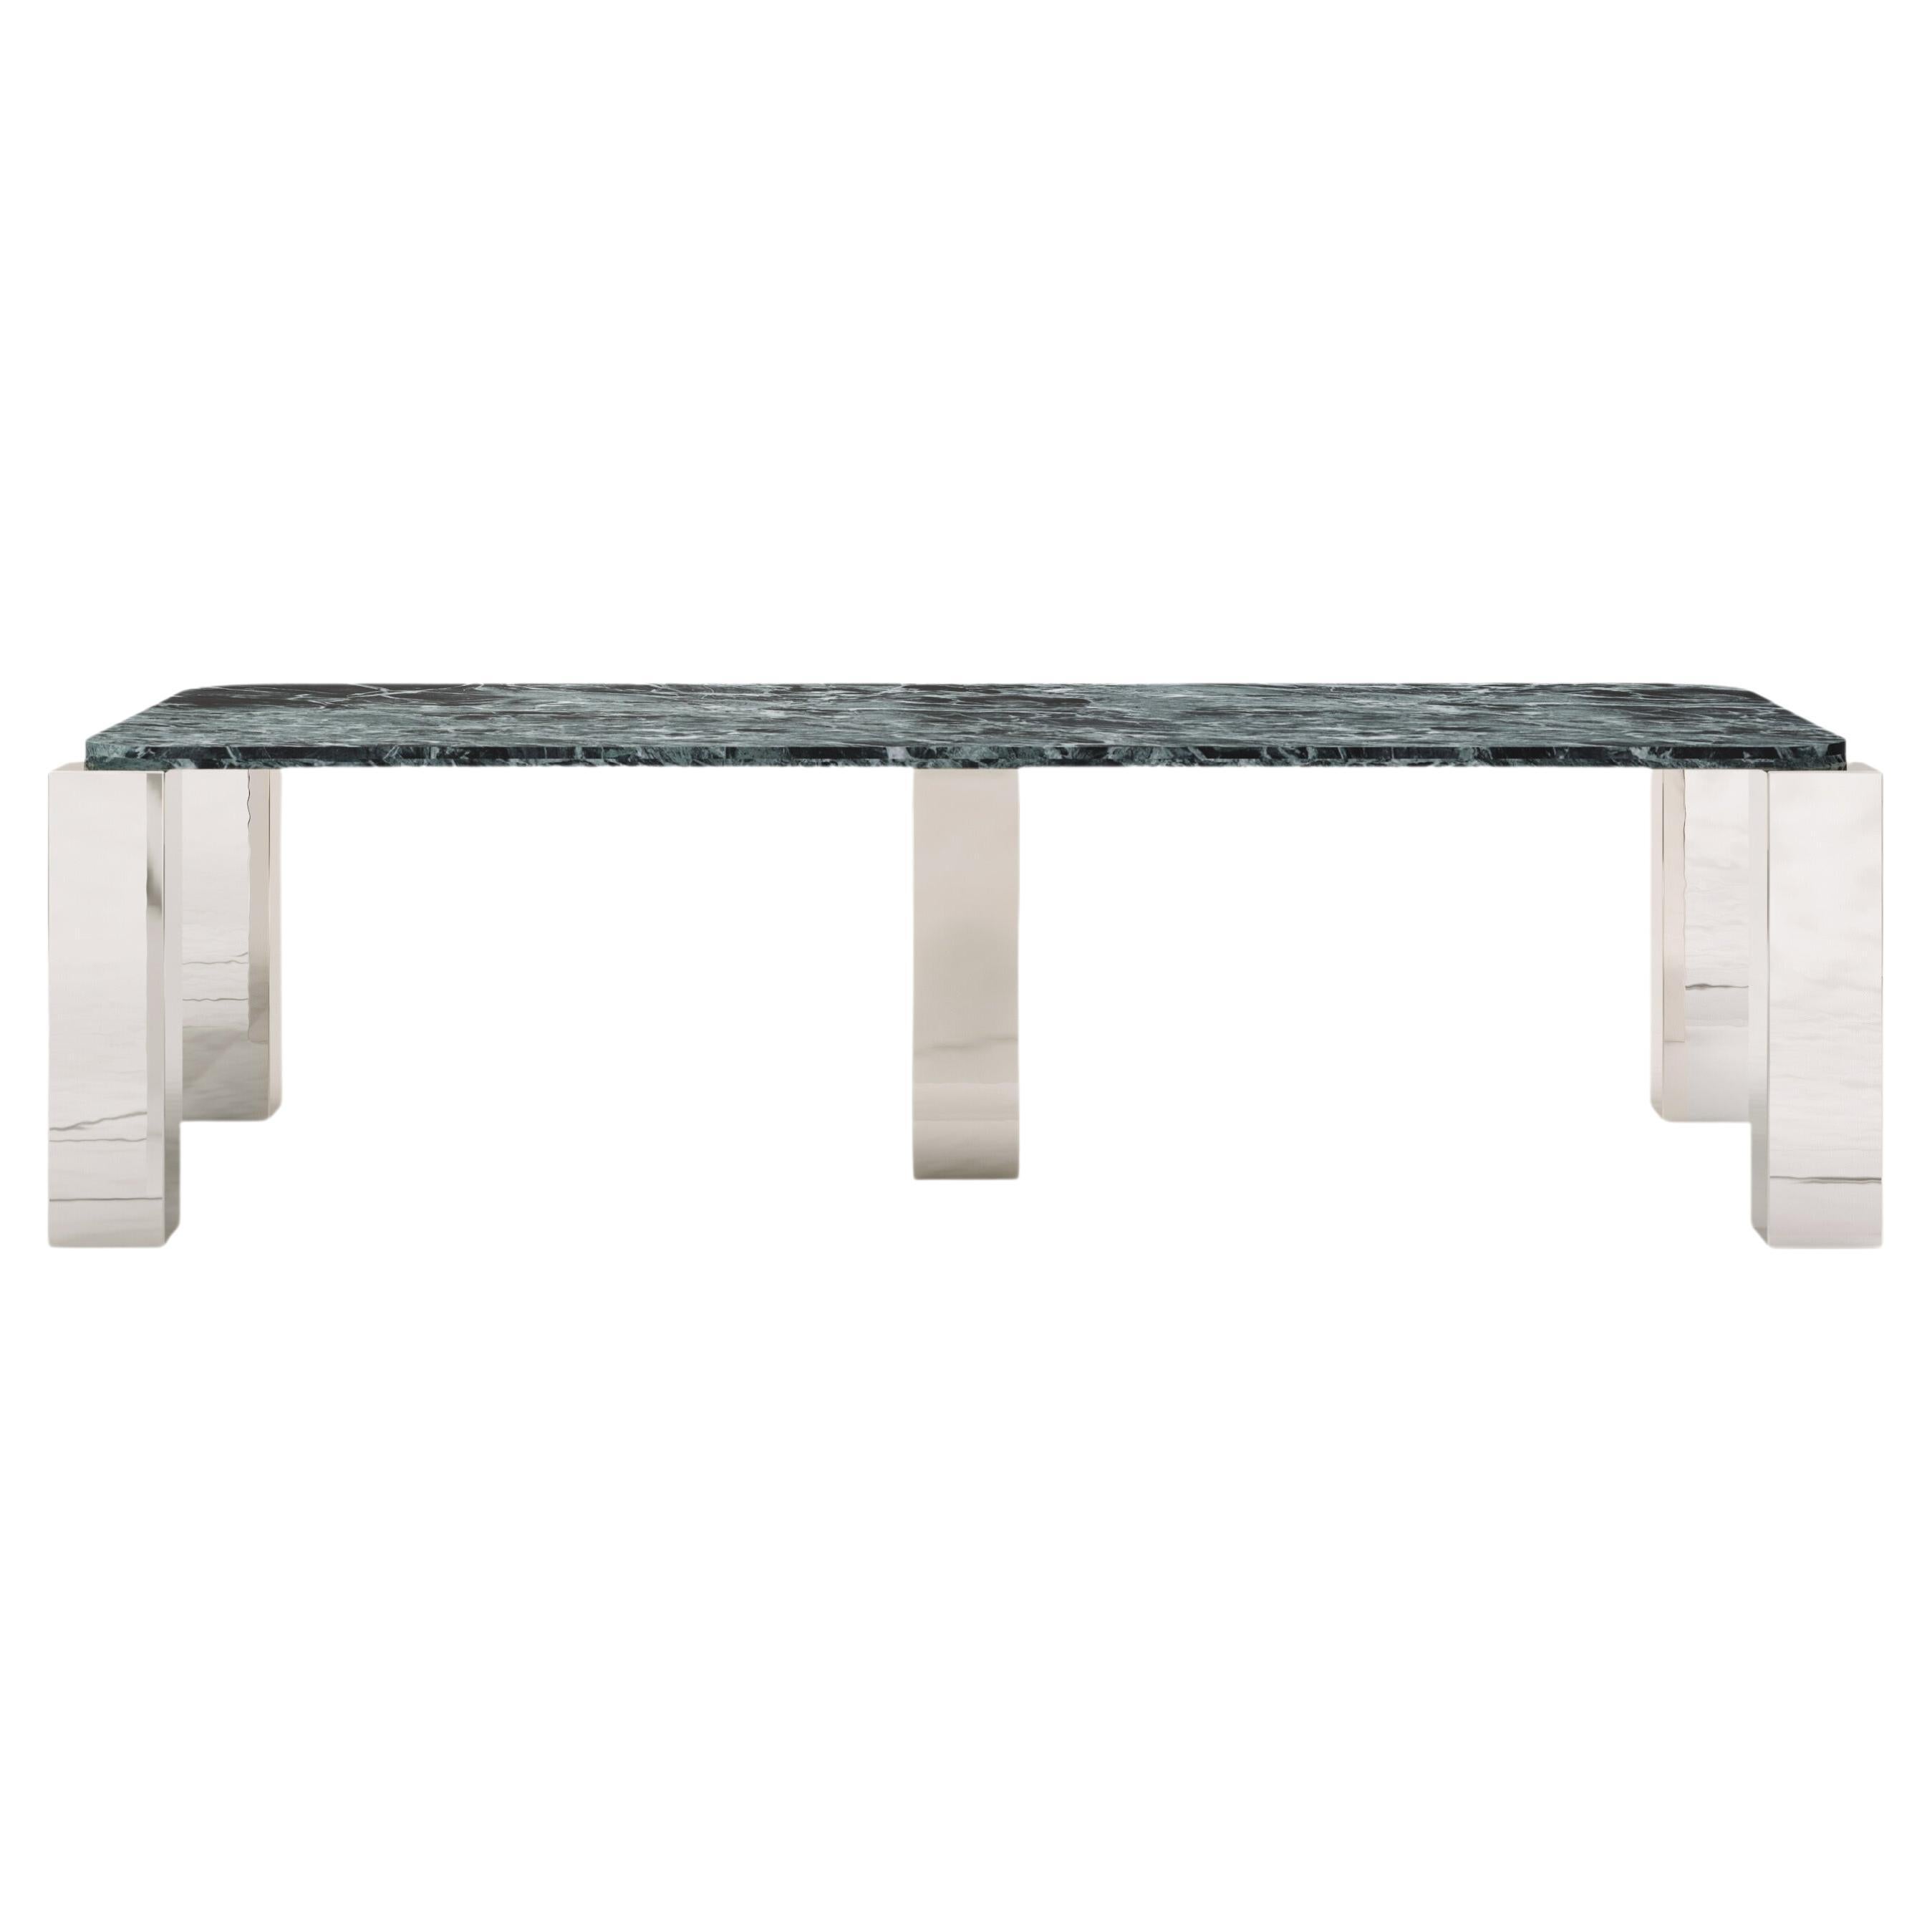 FORM(LA) Cubo Rectangle Dining Table 110”L x 50”W x 30”H Verde Marble & Chrome